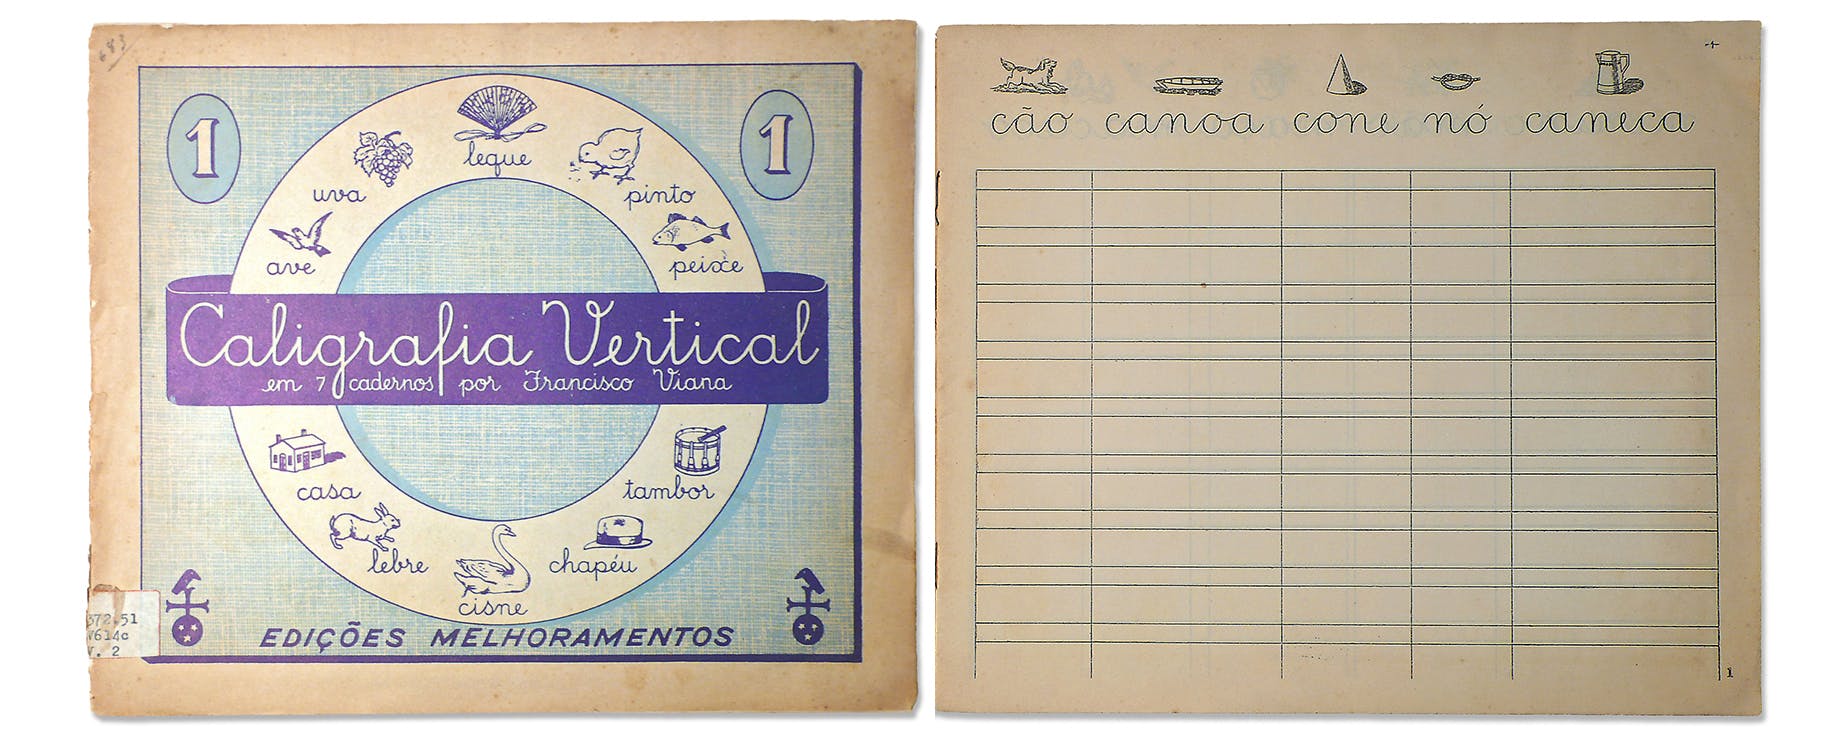 cover Cartilha Vertical 1956